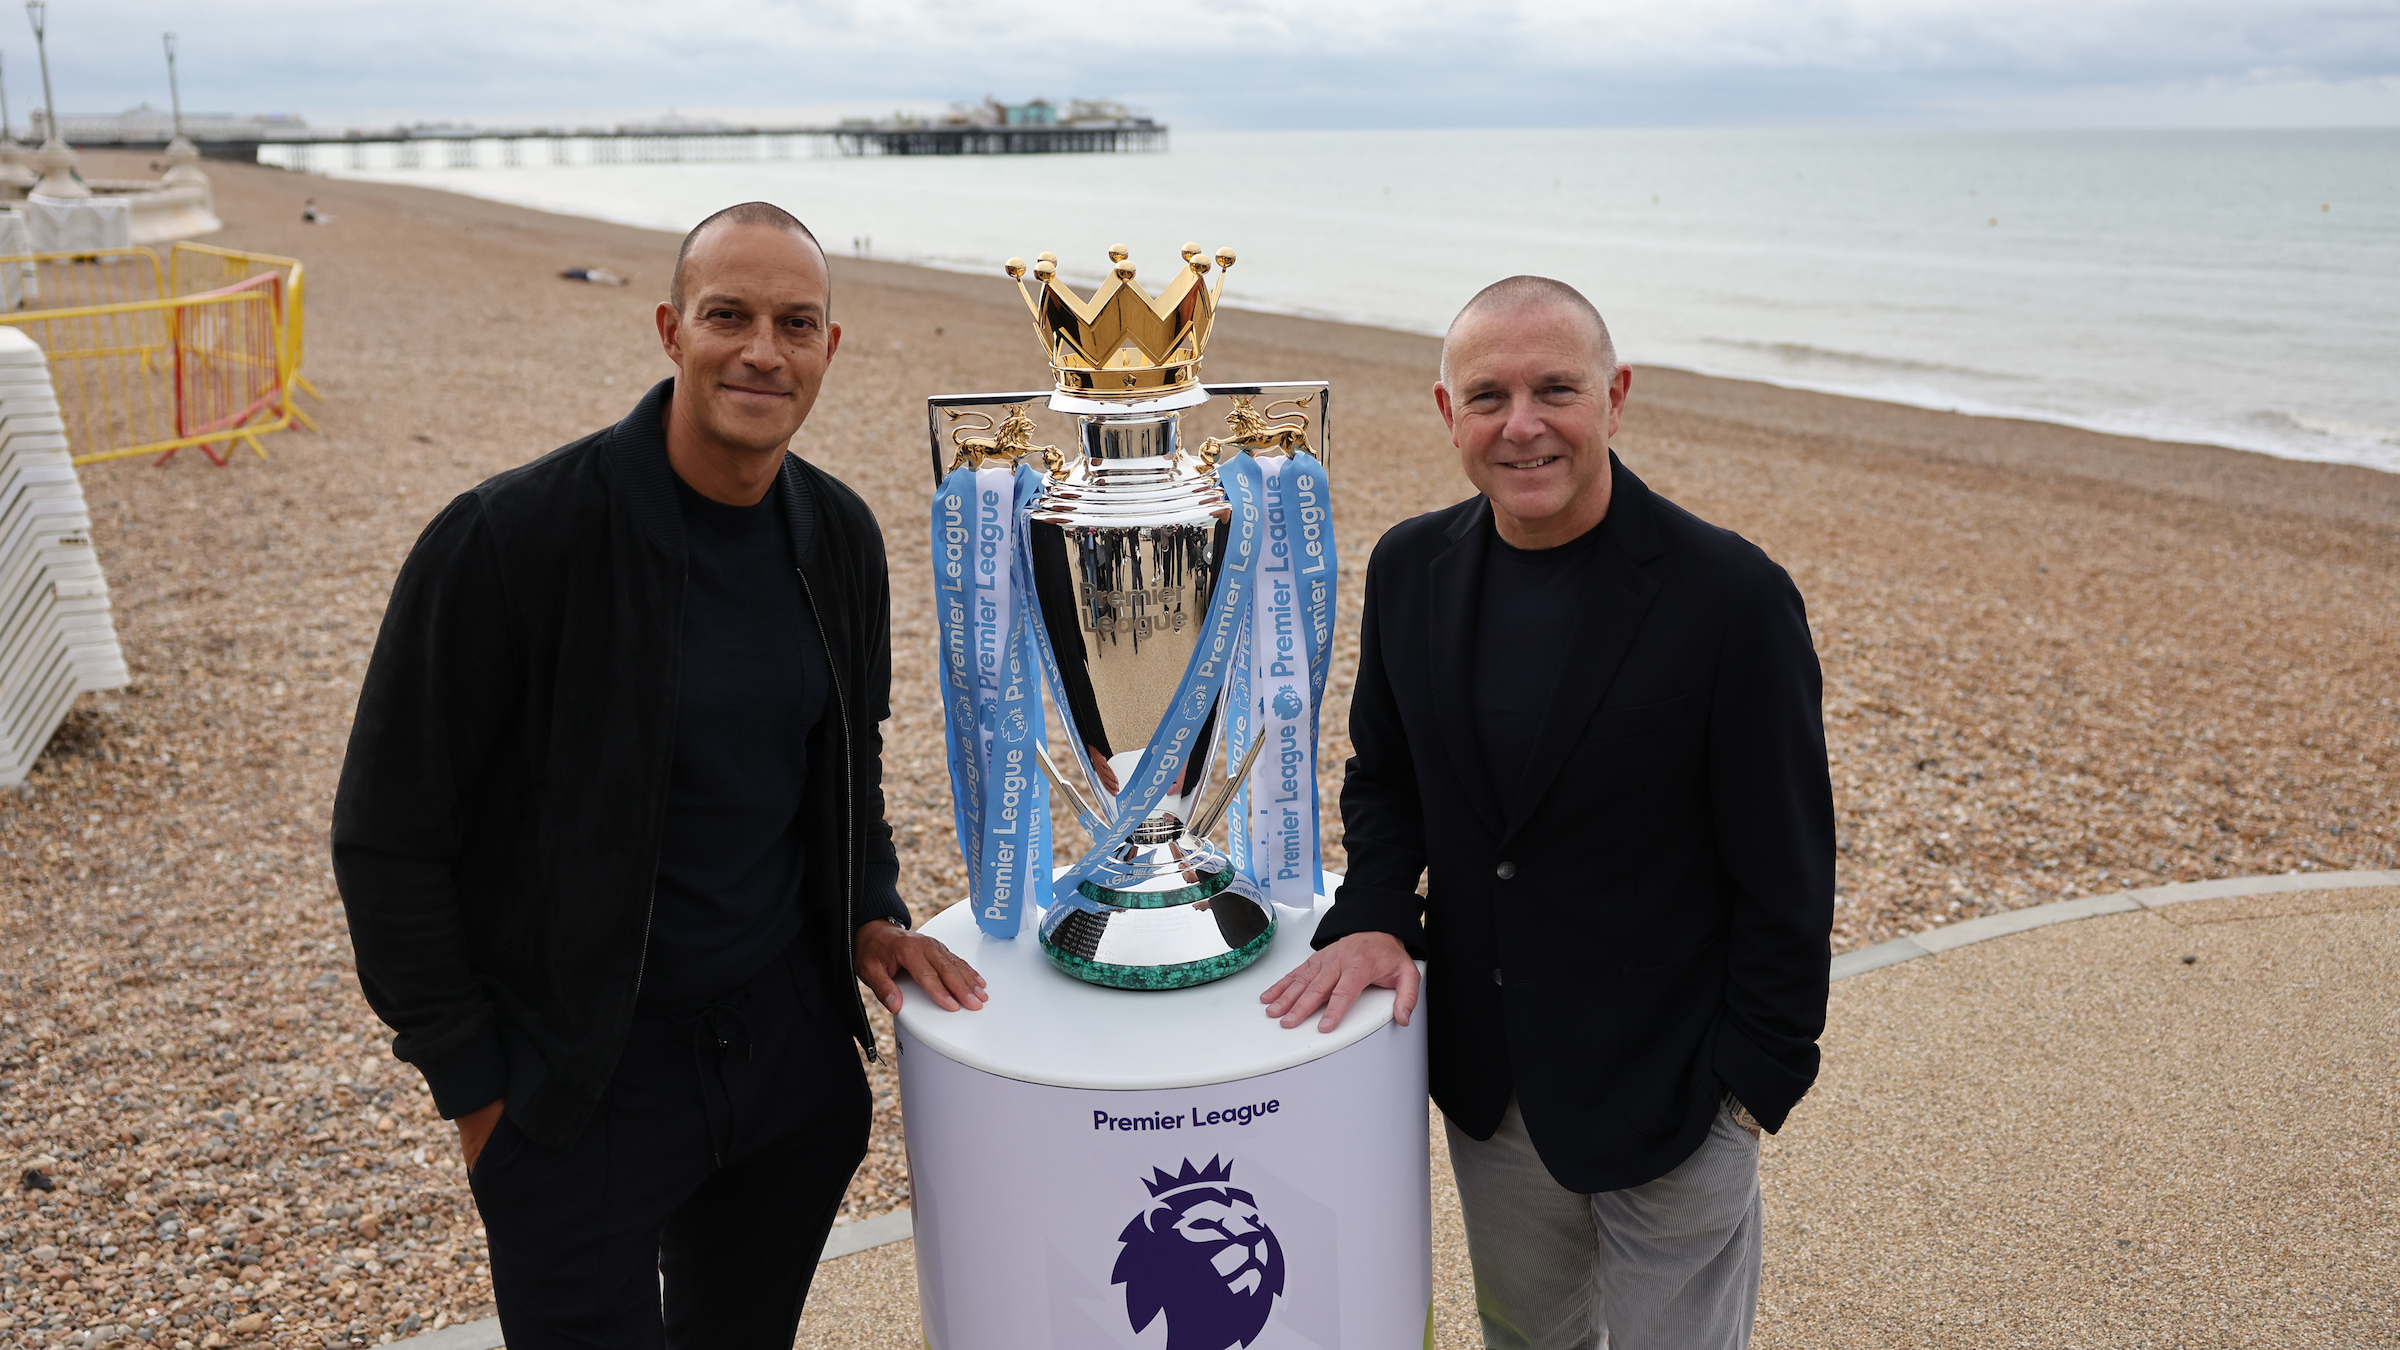 Premier League season kicks off with launch event in Brighton